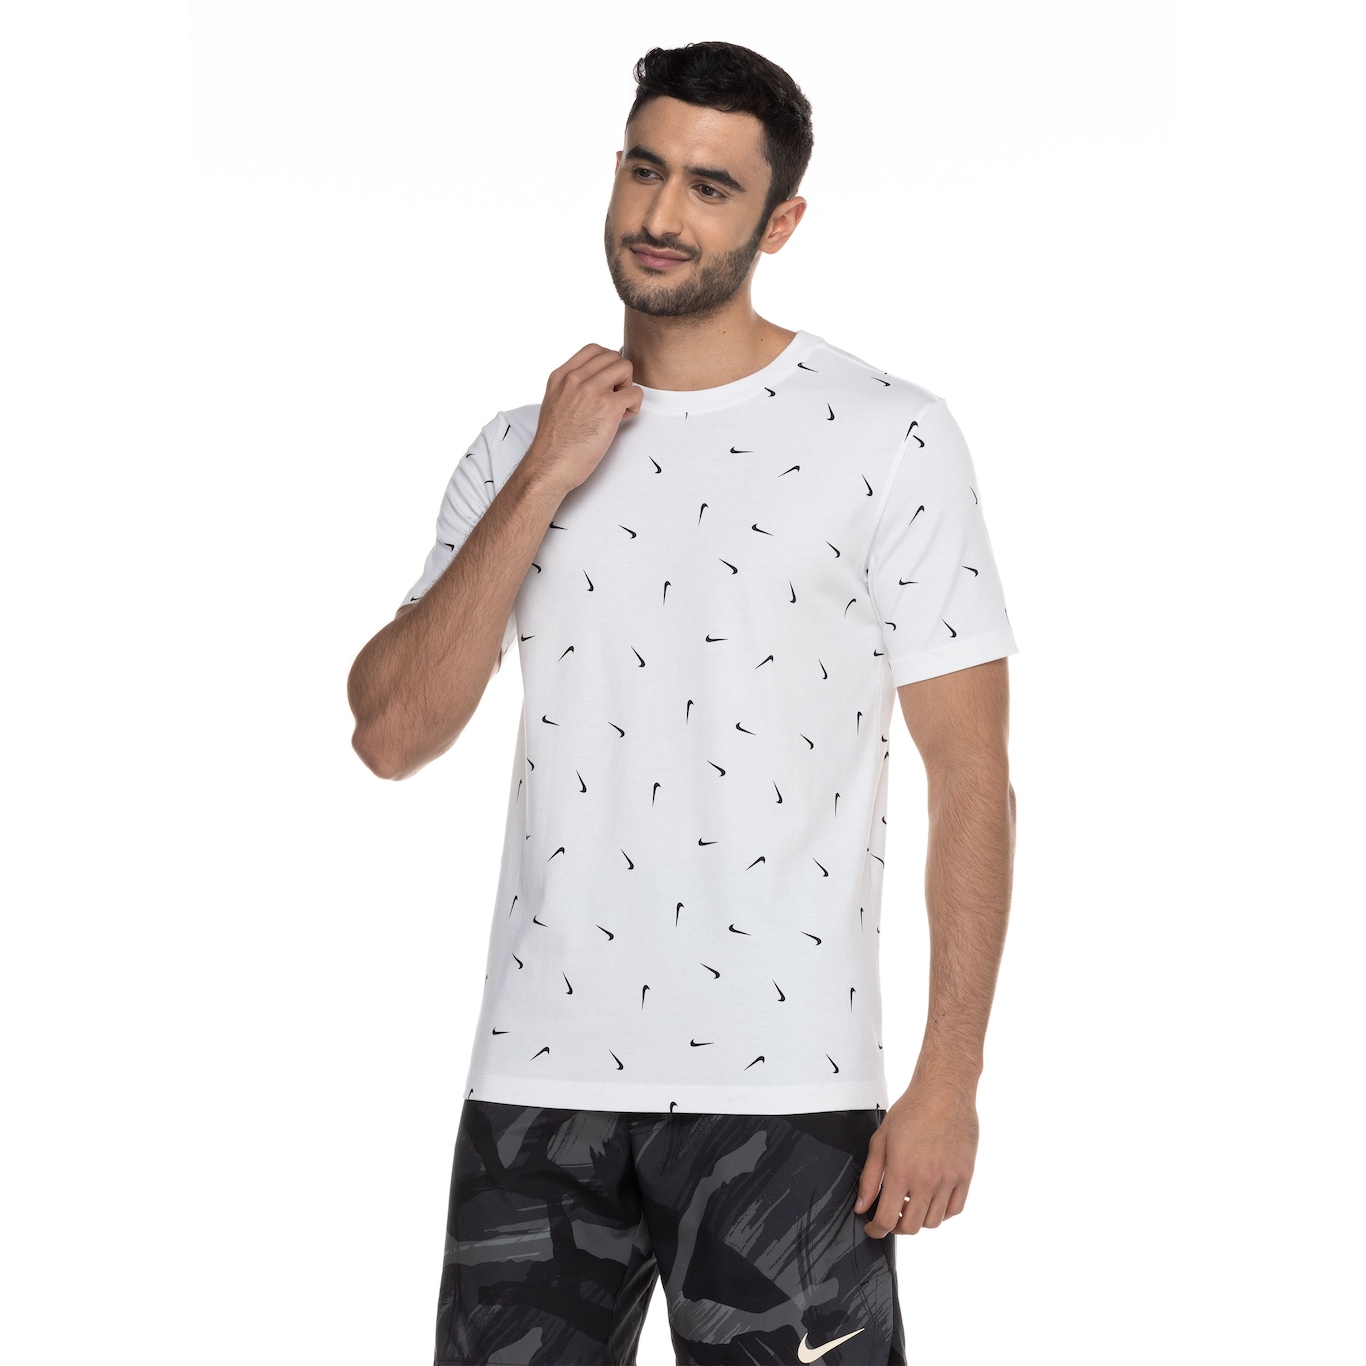 Camiseta Nike Nsw Tee Clb+ Aop - masculino - preto+branco, Nike, Casuais,  PTO/BCO